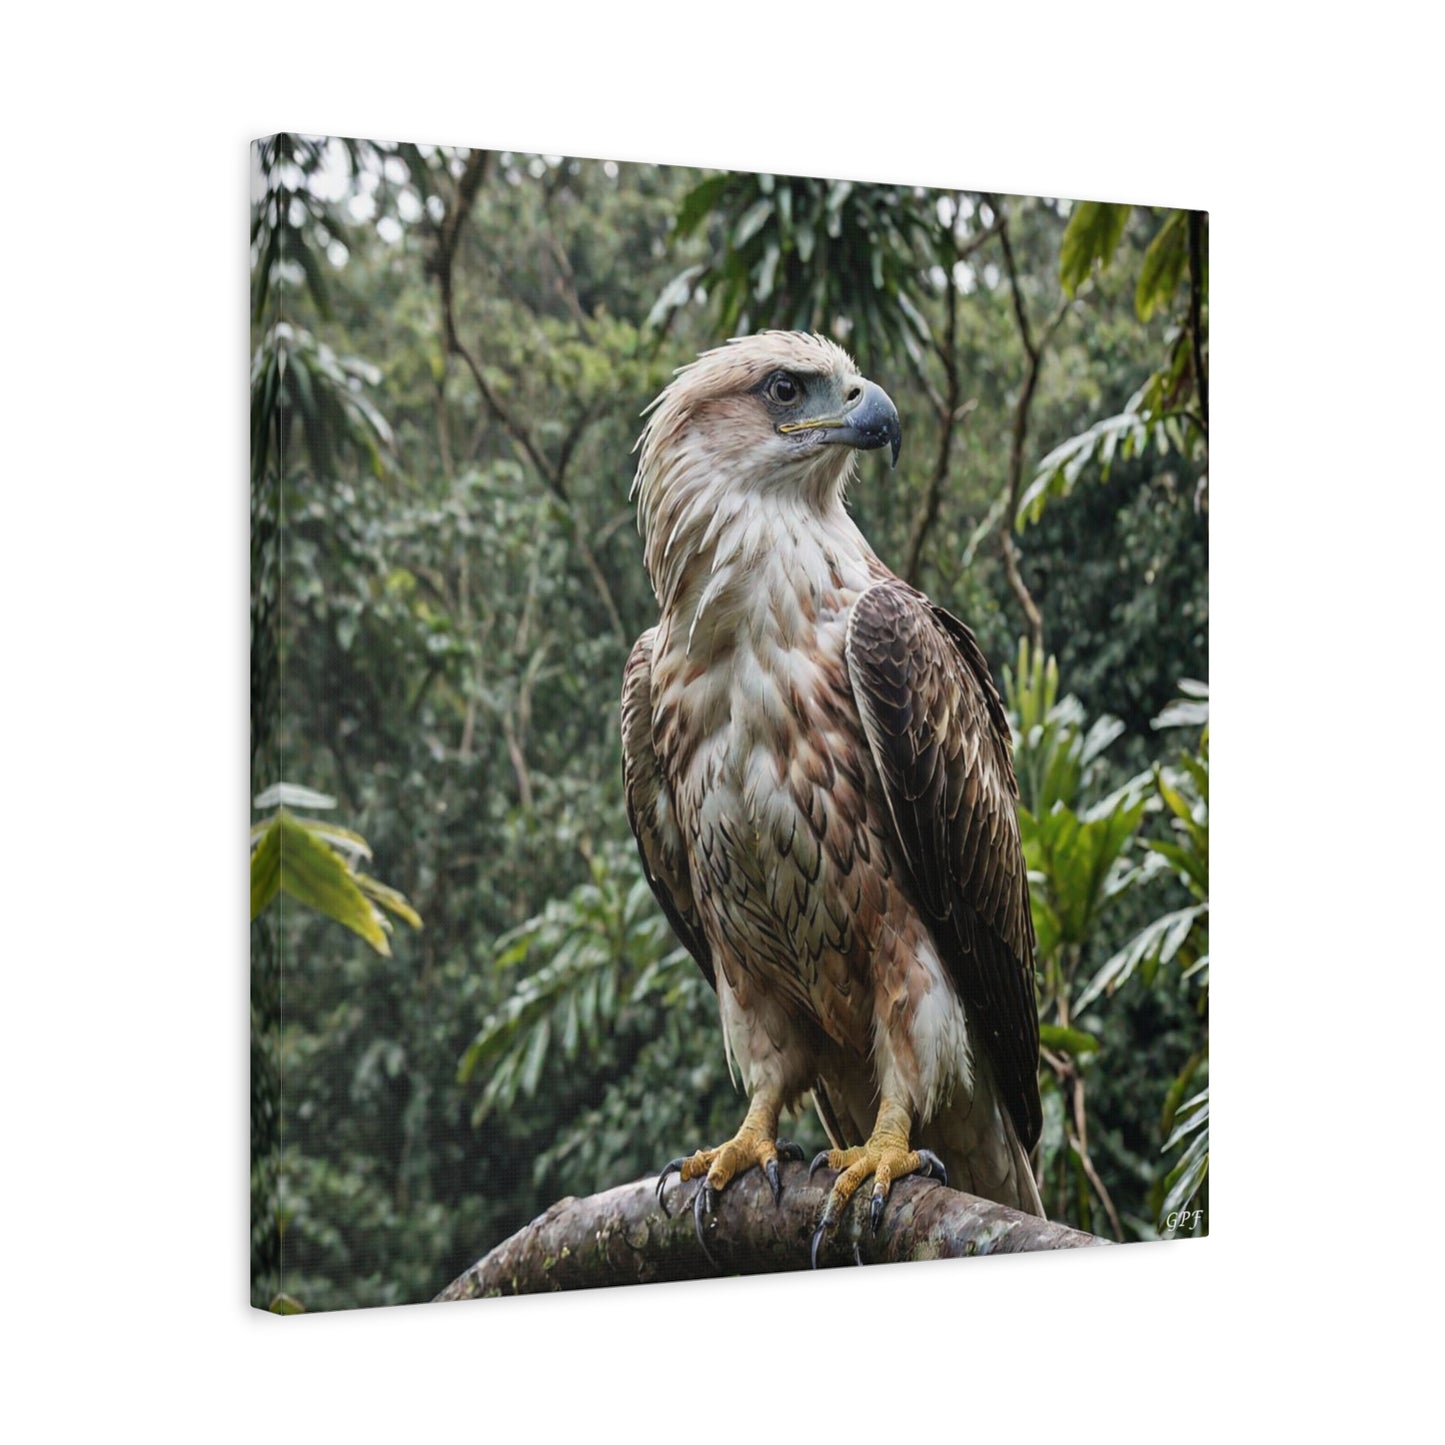 Philippine Eagle (0068)